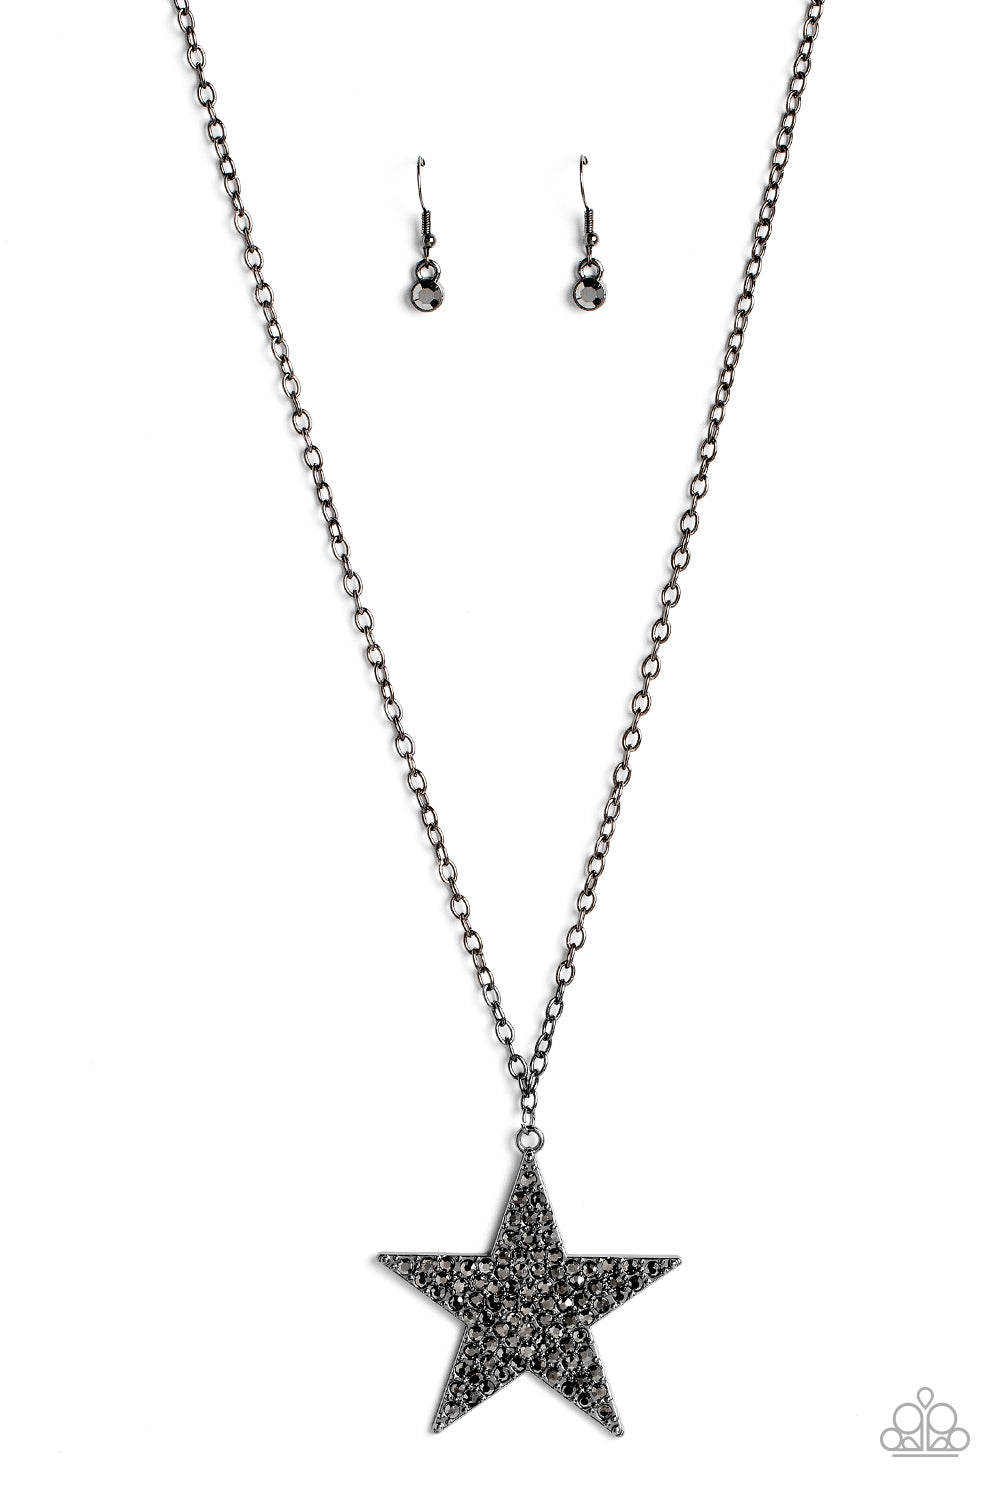 Rock Star Sparkle - black - Paparazzi necklace